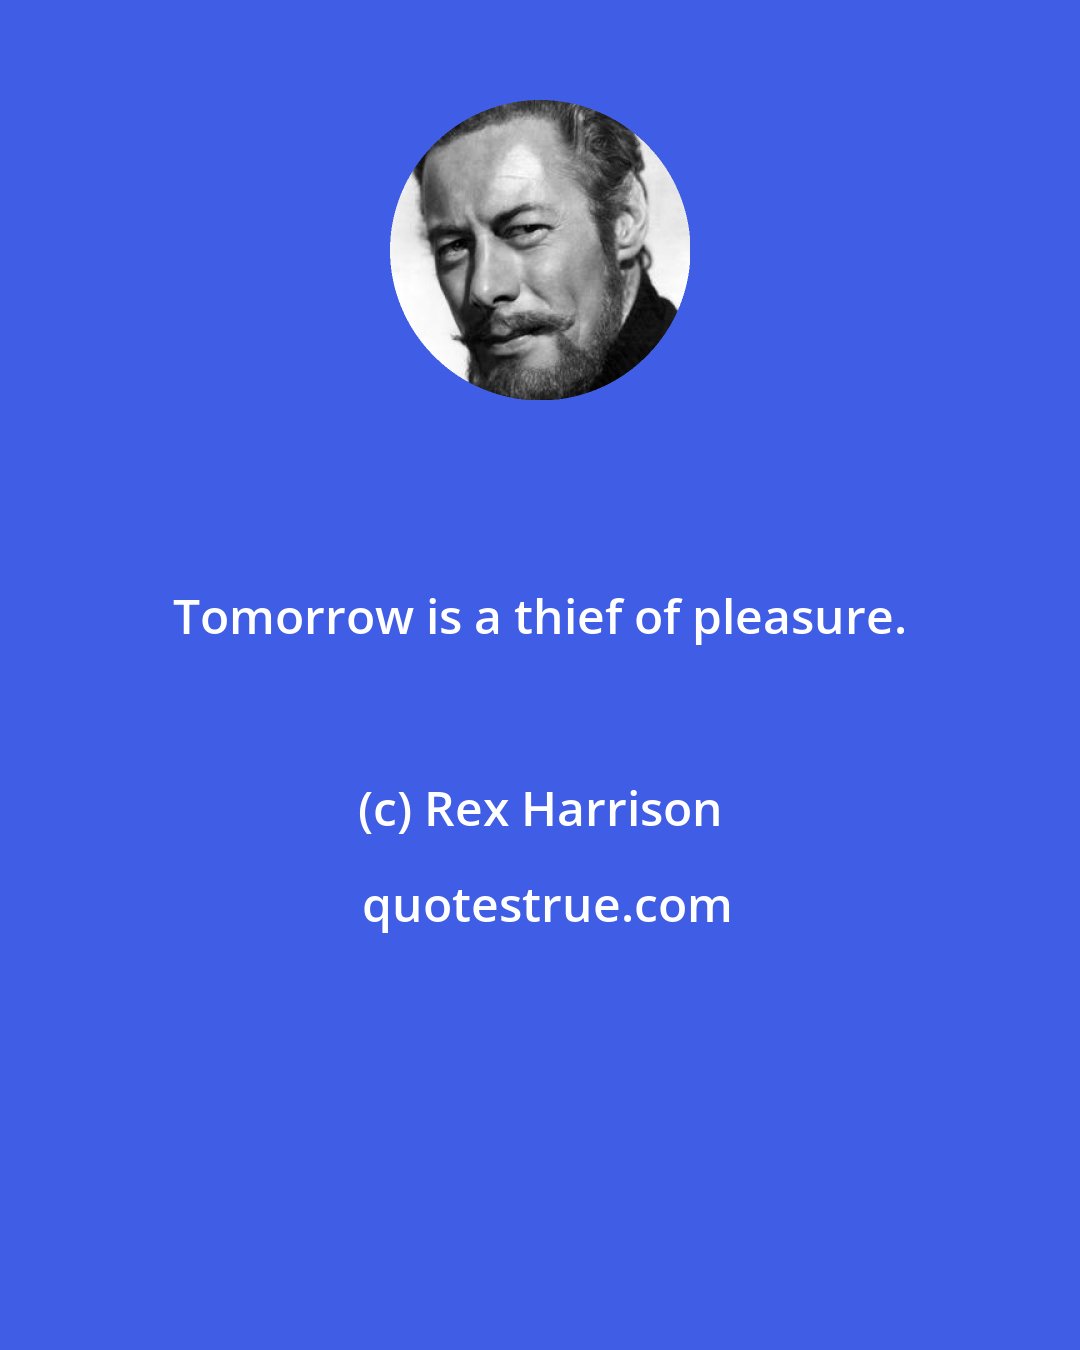 Rex Harrison: Tomorrow is a thief of pleasure.